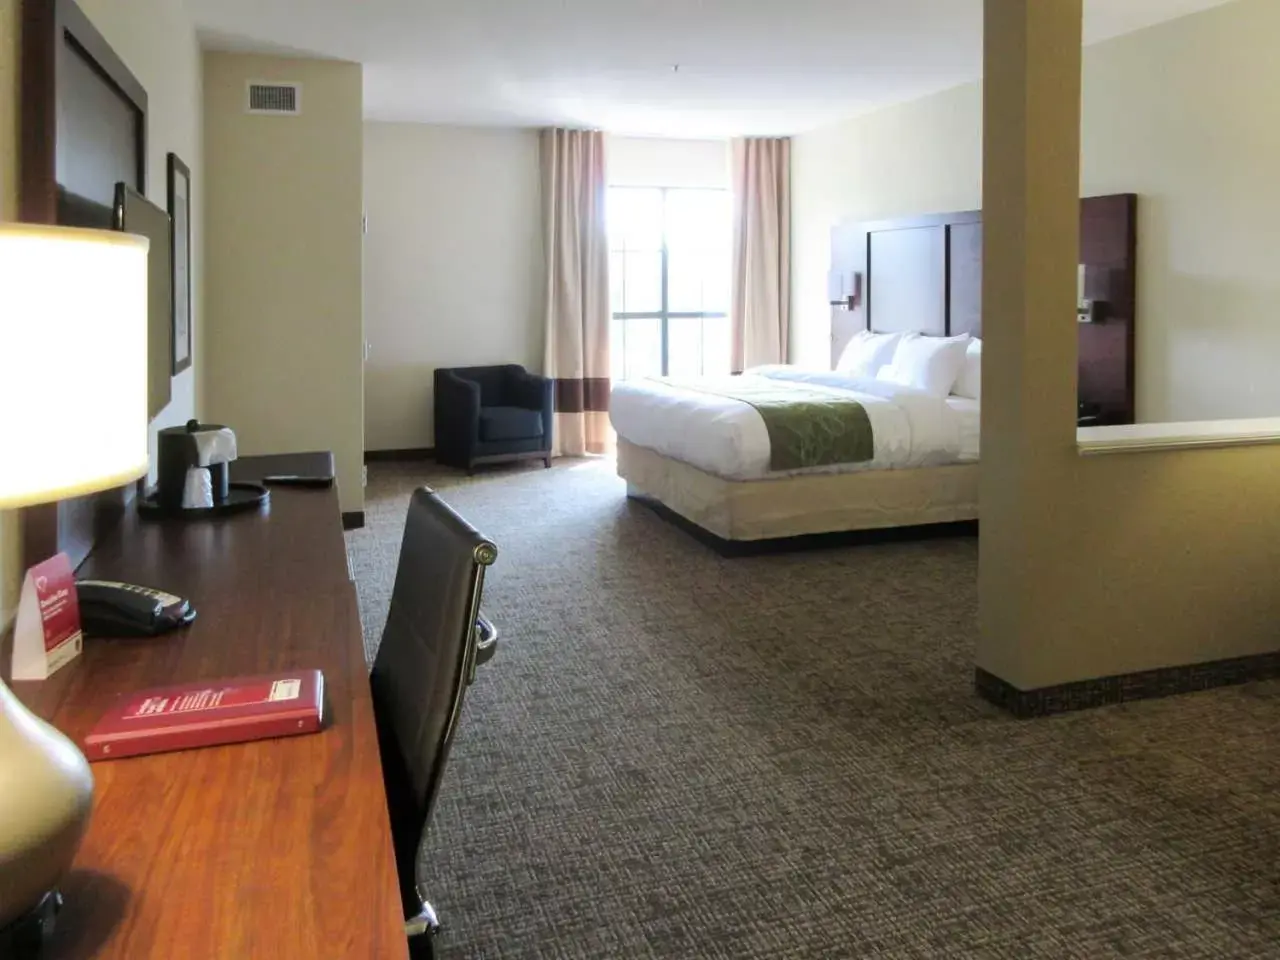 Bedroom in Comfort Suites Greenville South